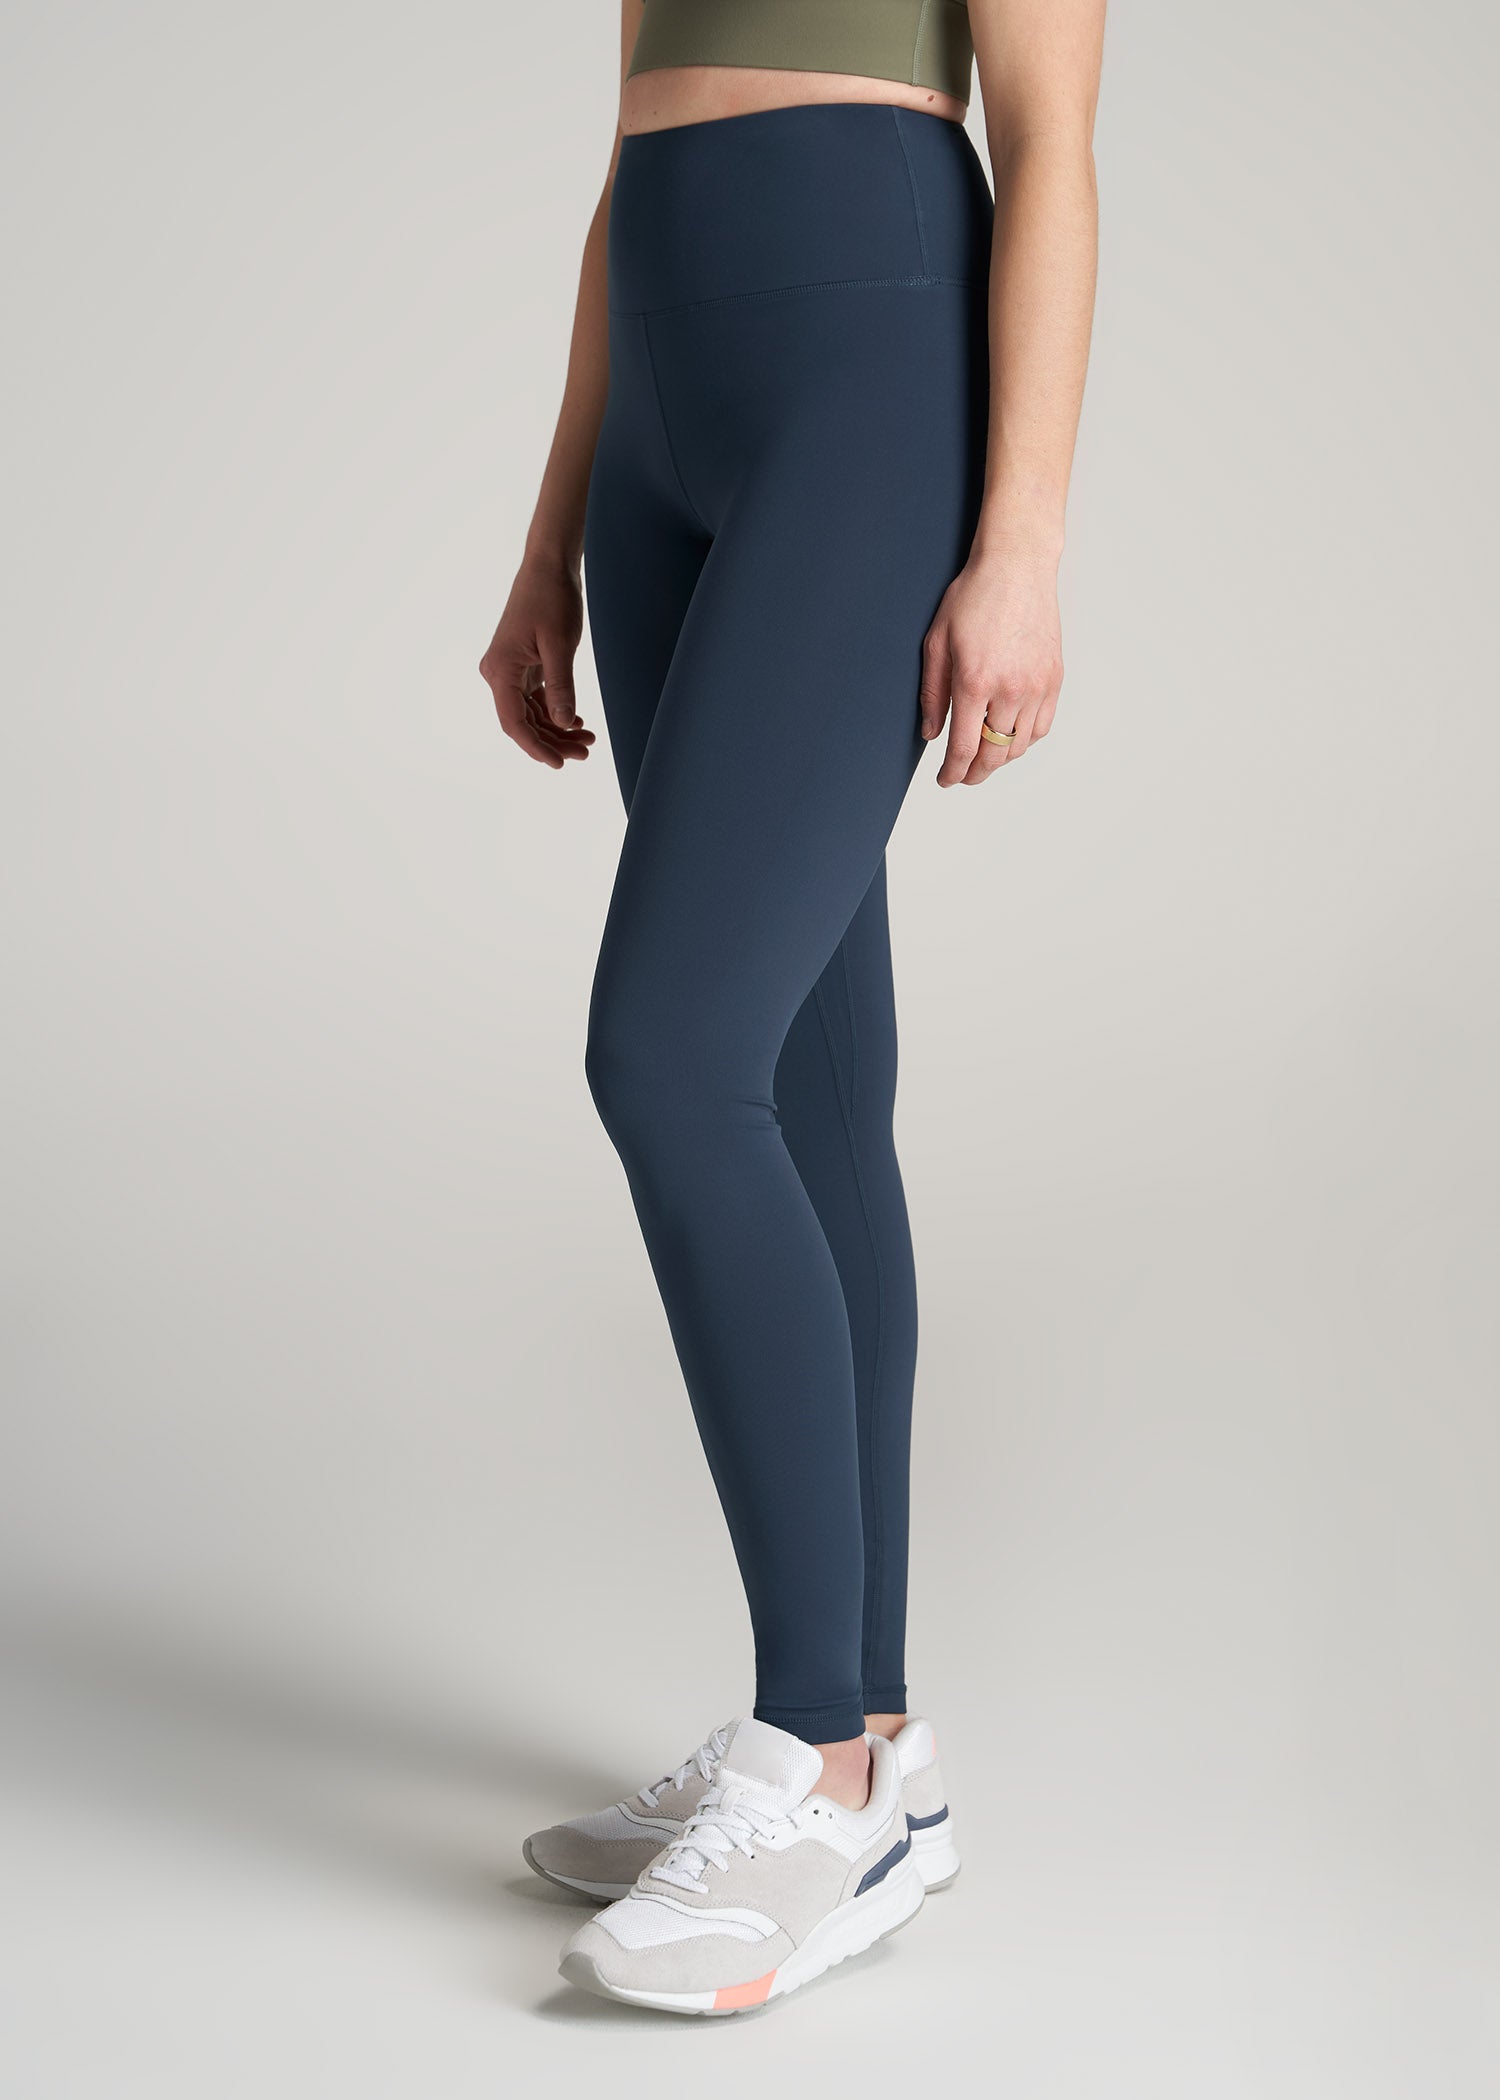 lululemon athletica, Pants & Jumpsuits, Navy Blue Cropped Lululemon  Leggings Size 6